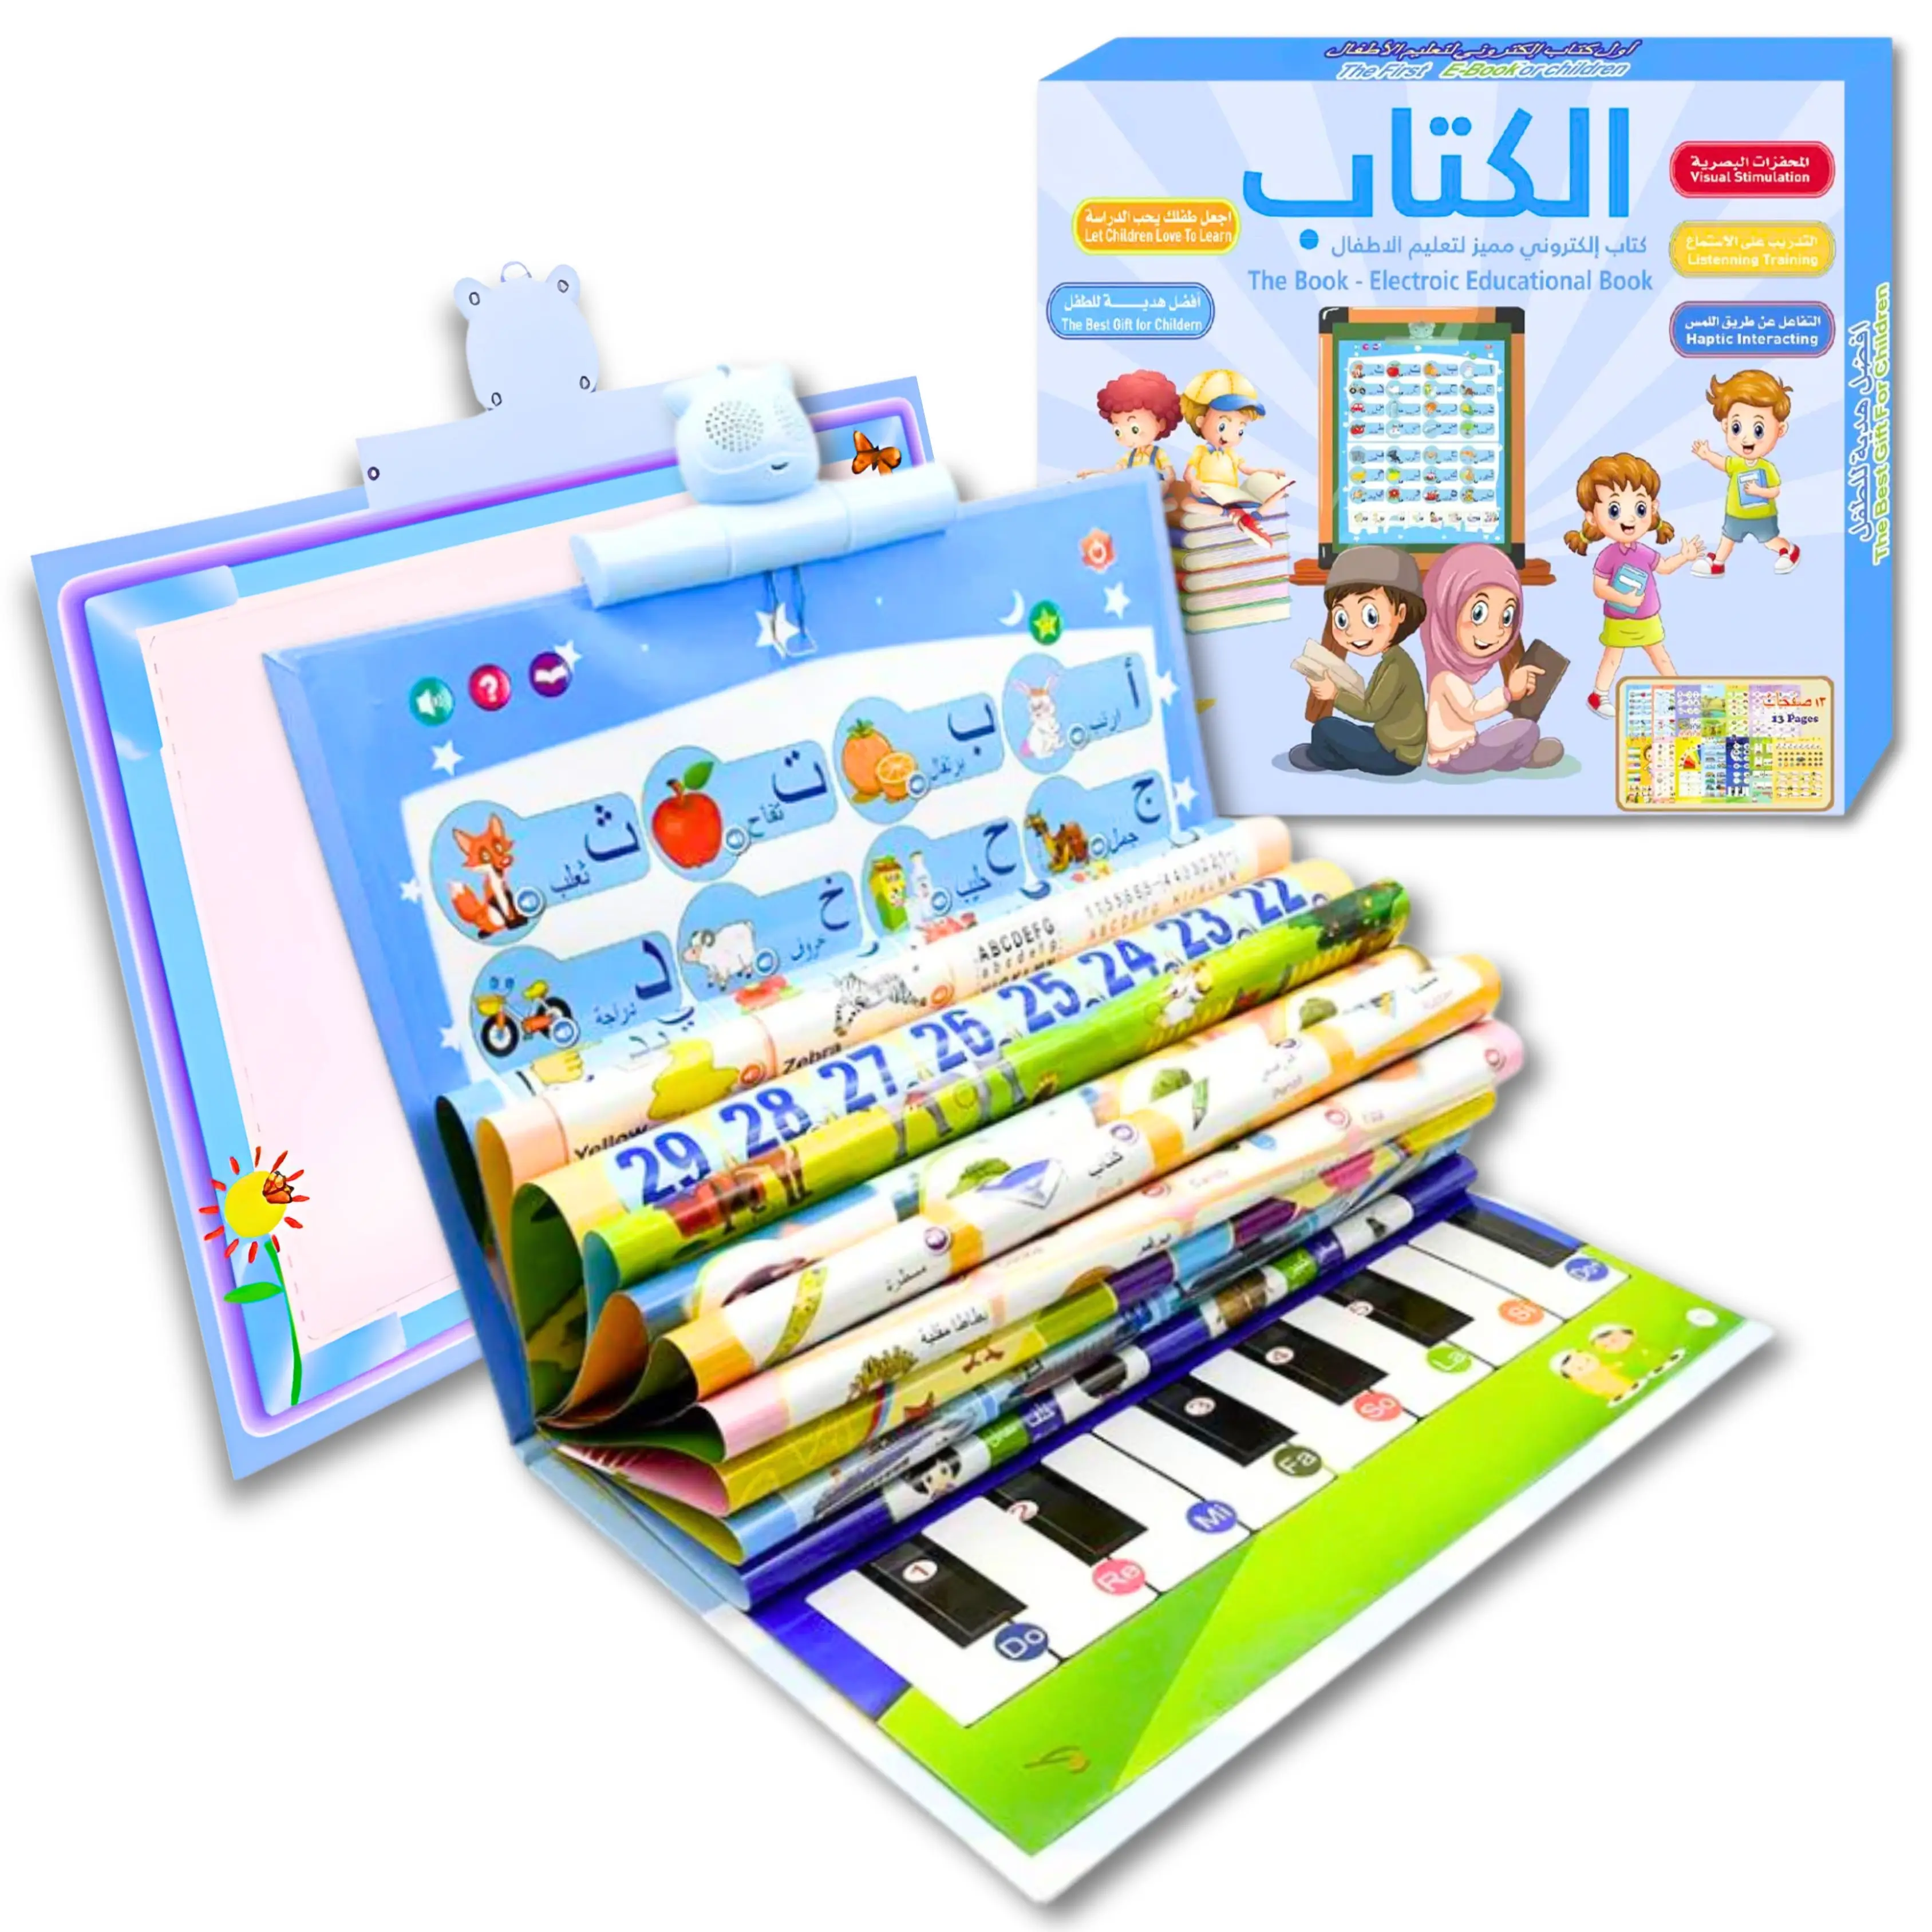 EBook elektronik interaktif, pemutar pendidikan dini gambar pembelajaran bahasa Inggris pembaca buku elektronik Arab untuk anak-anak